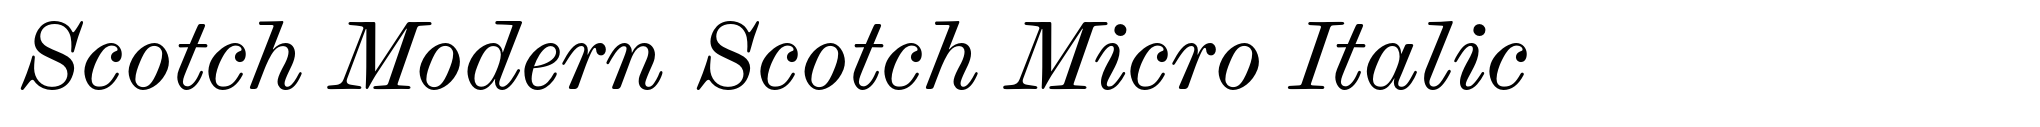 Scotch Modern Scotch Micro Italic image